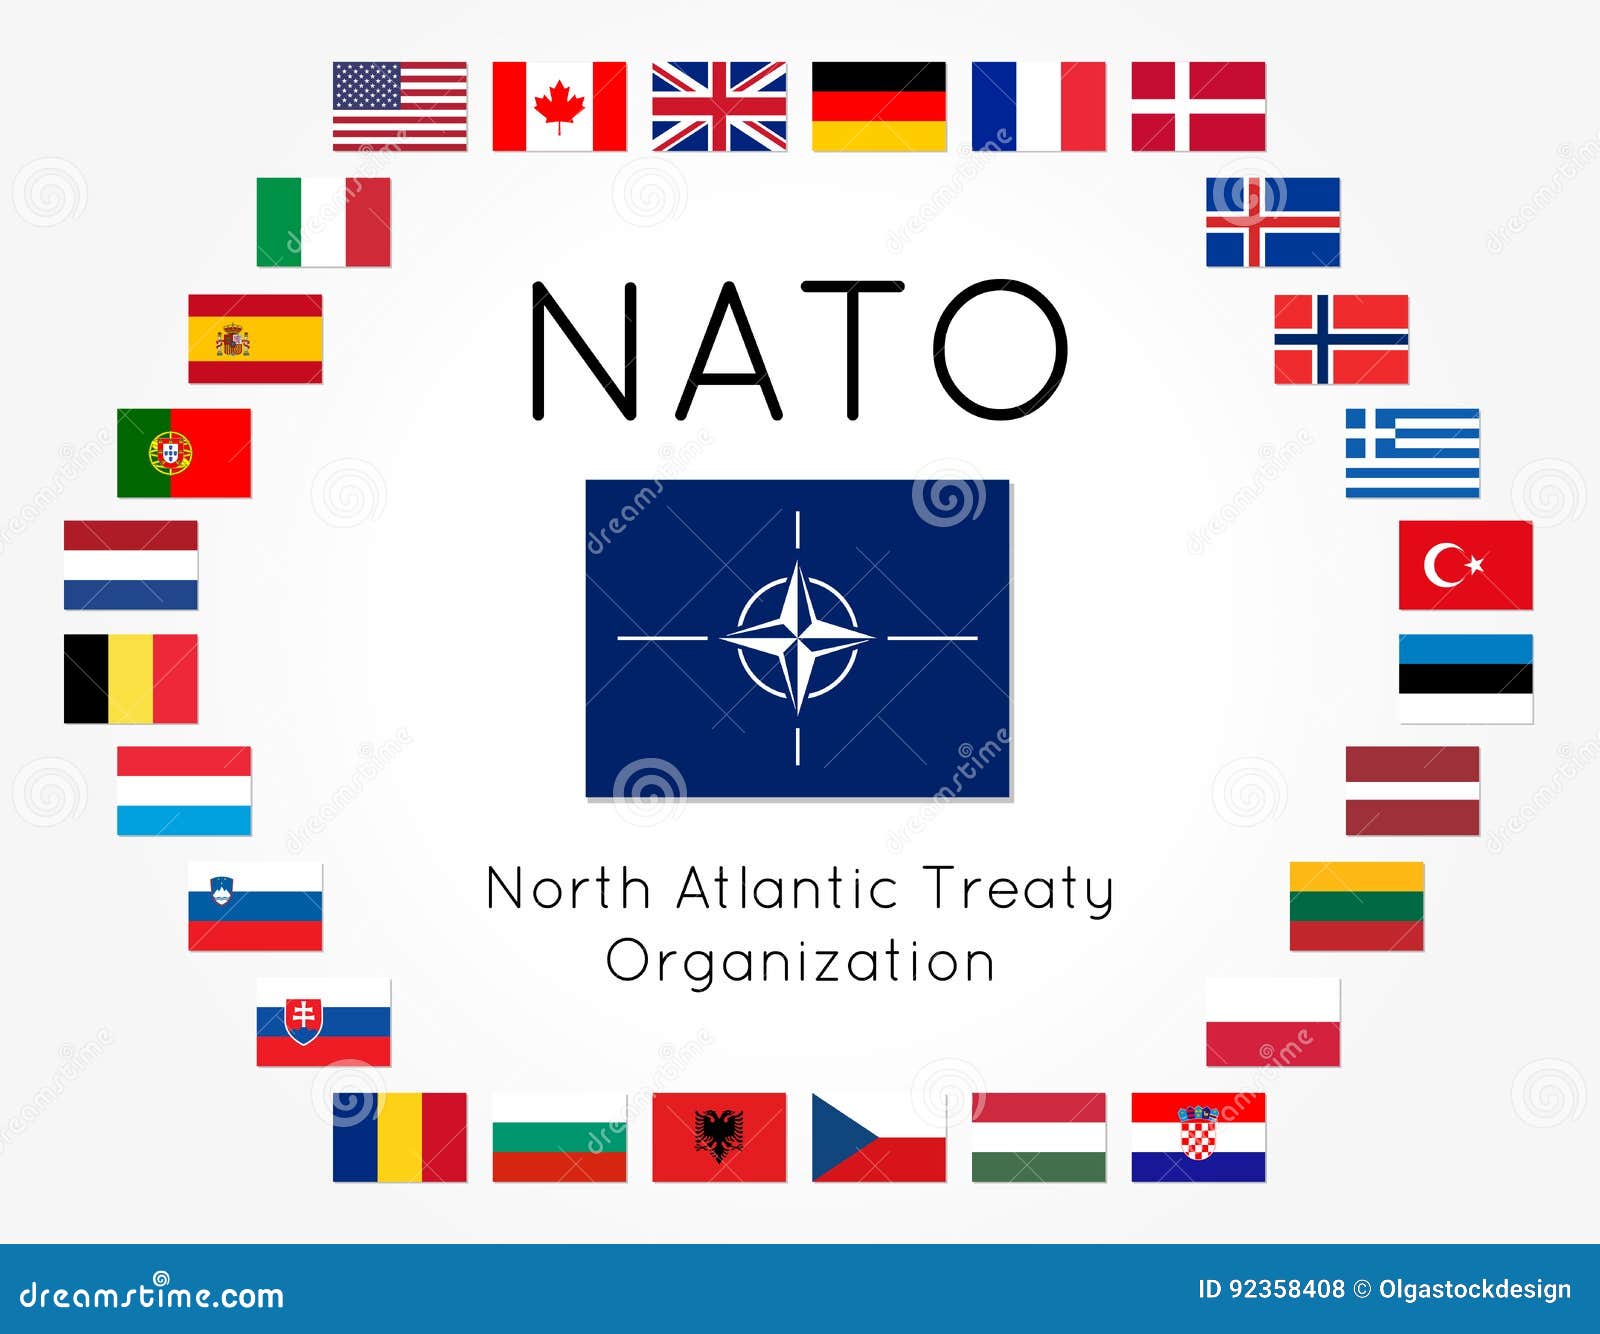 Nato Flag Map